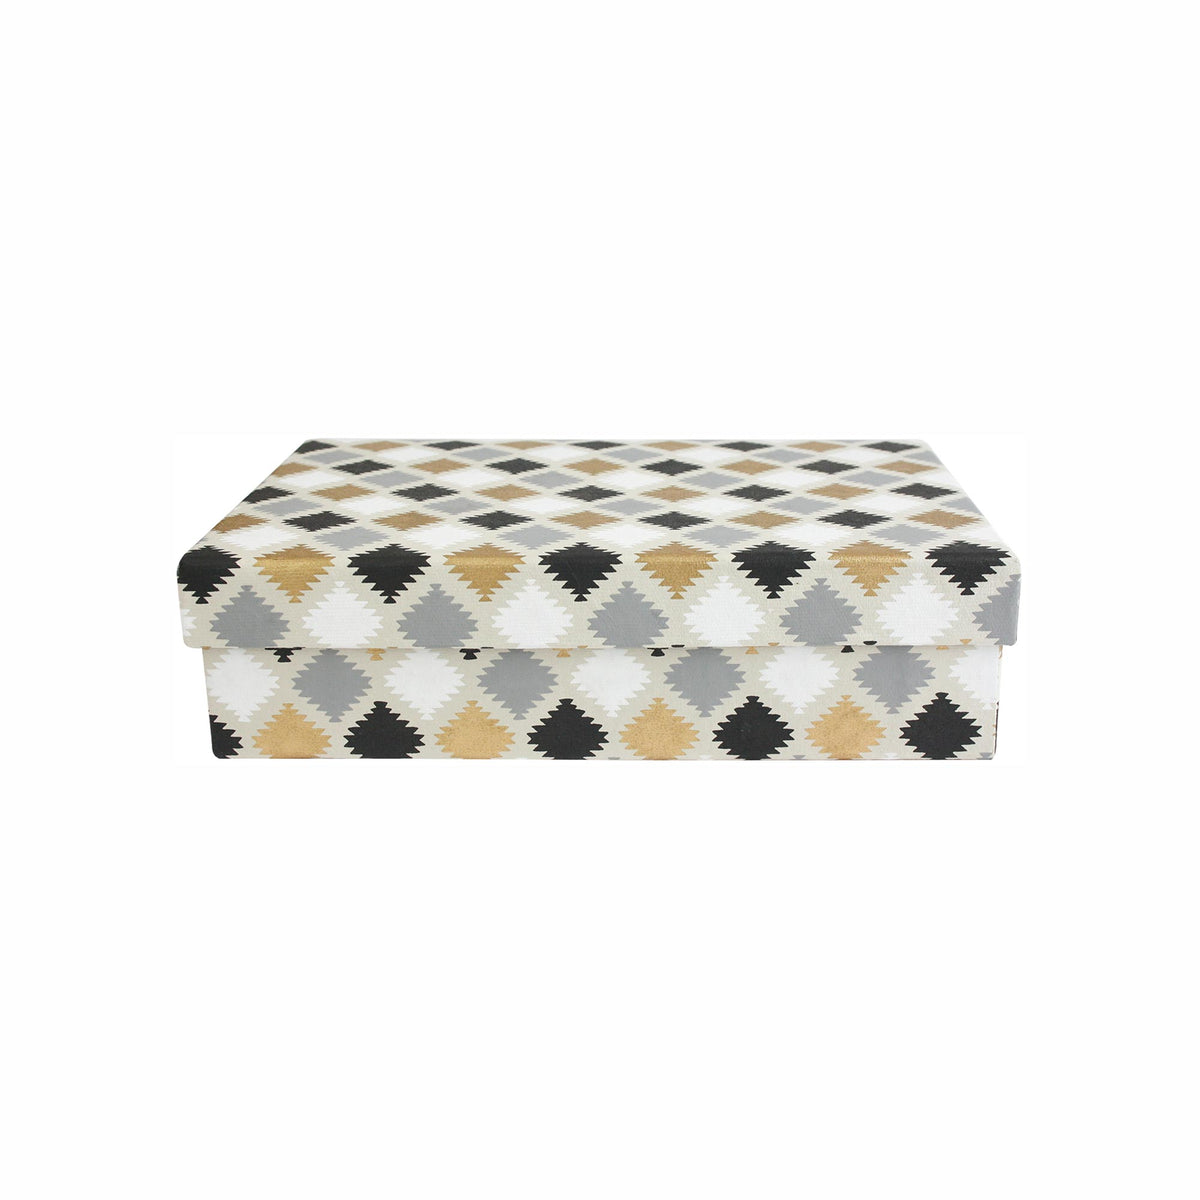 Handmade Geometric Patterned Black/Gold Gift Box - Single (Sizes Available)